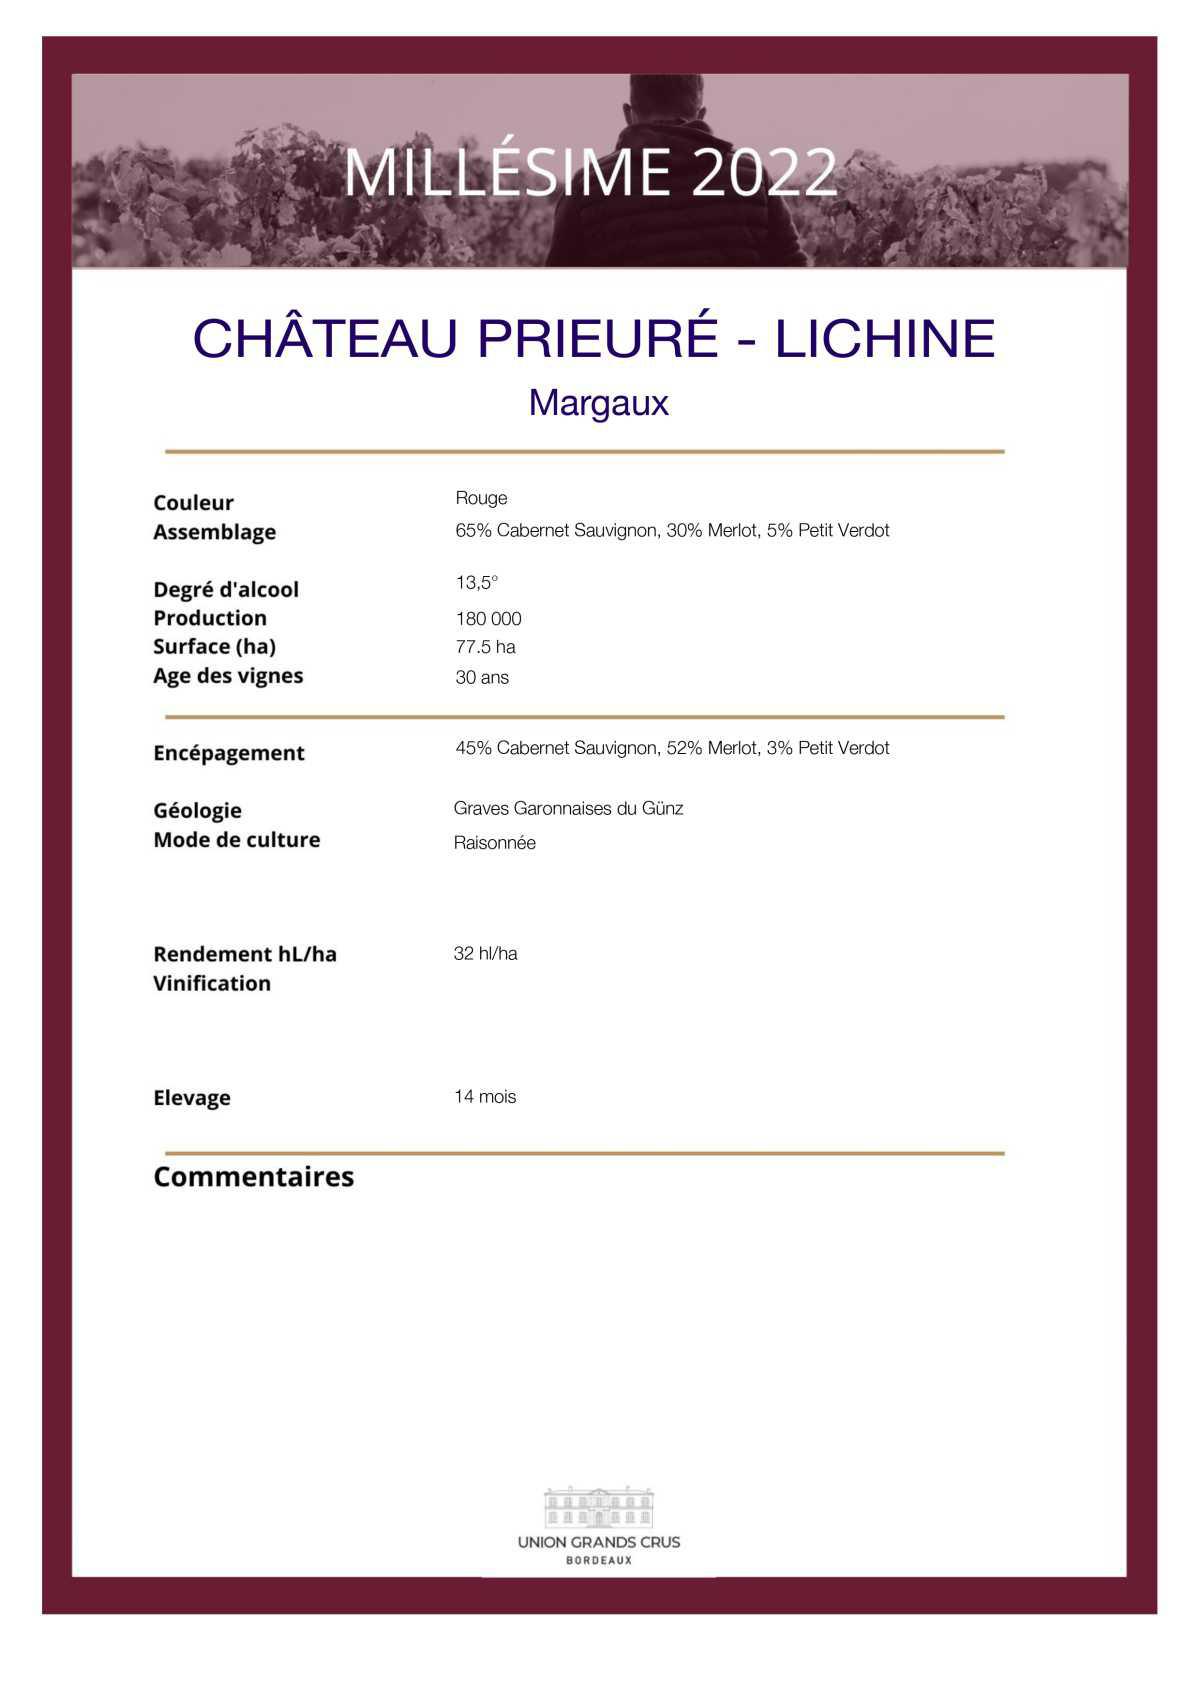  Château Prieuré - Lichine 